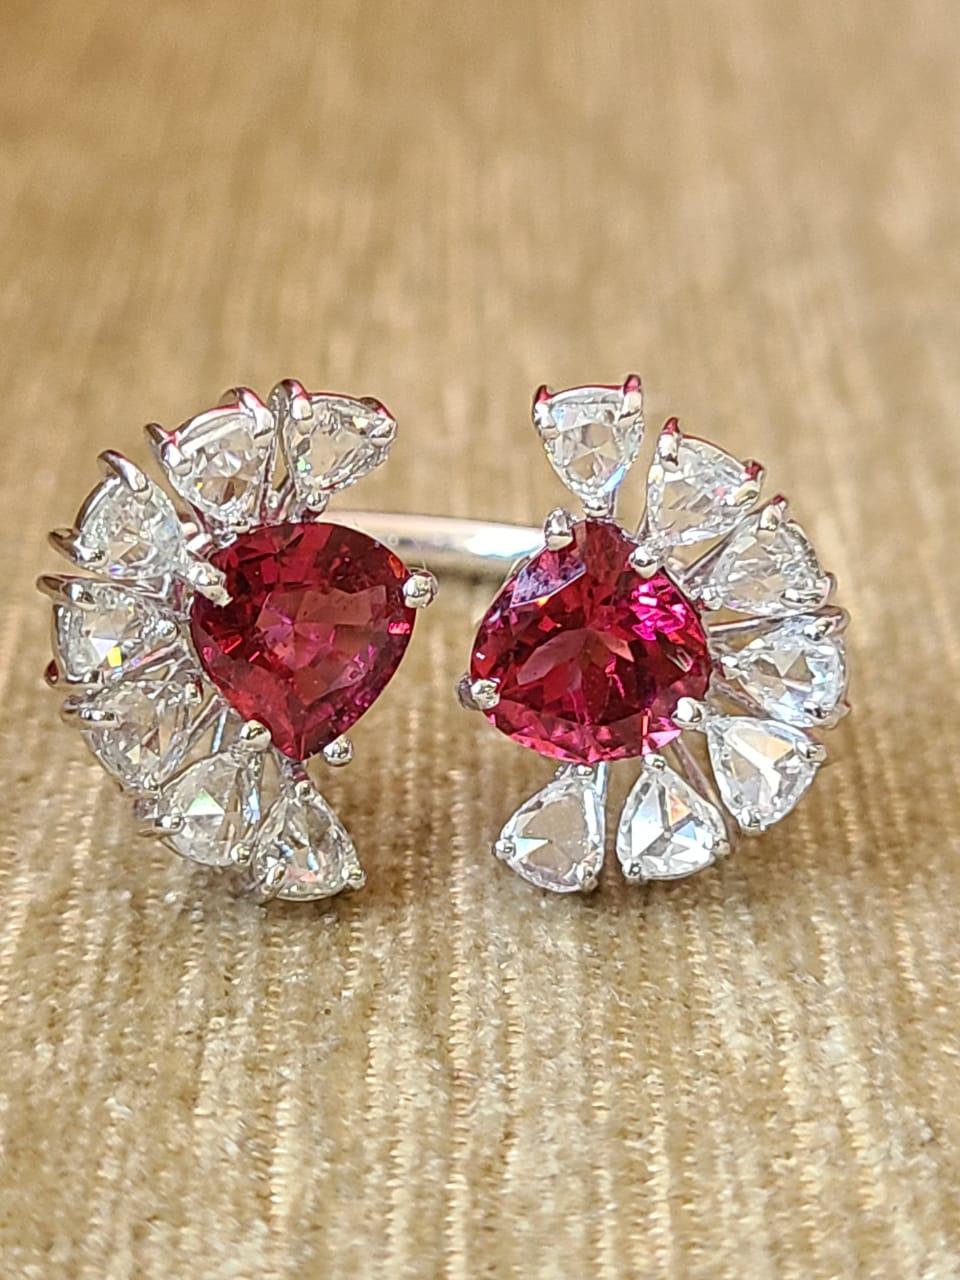 Set in 18K White Gold, Rubellite & Rose Cut Diamonds Cocktail/ Engagement Ring 1